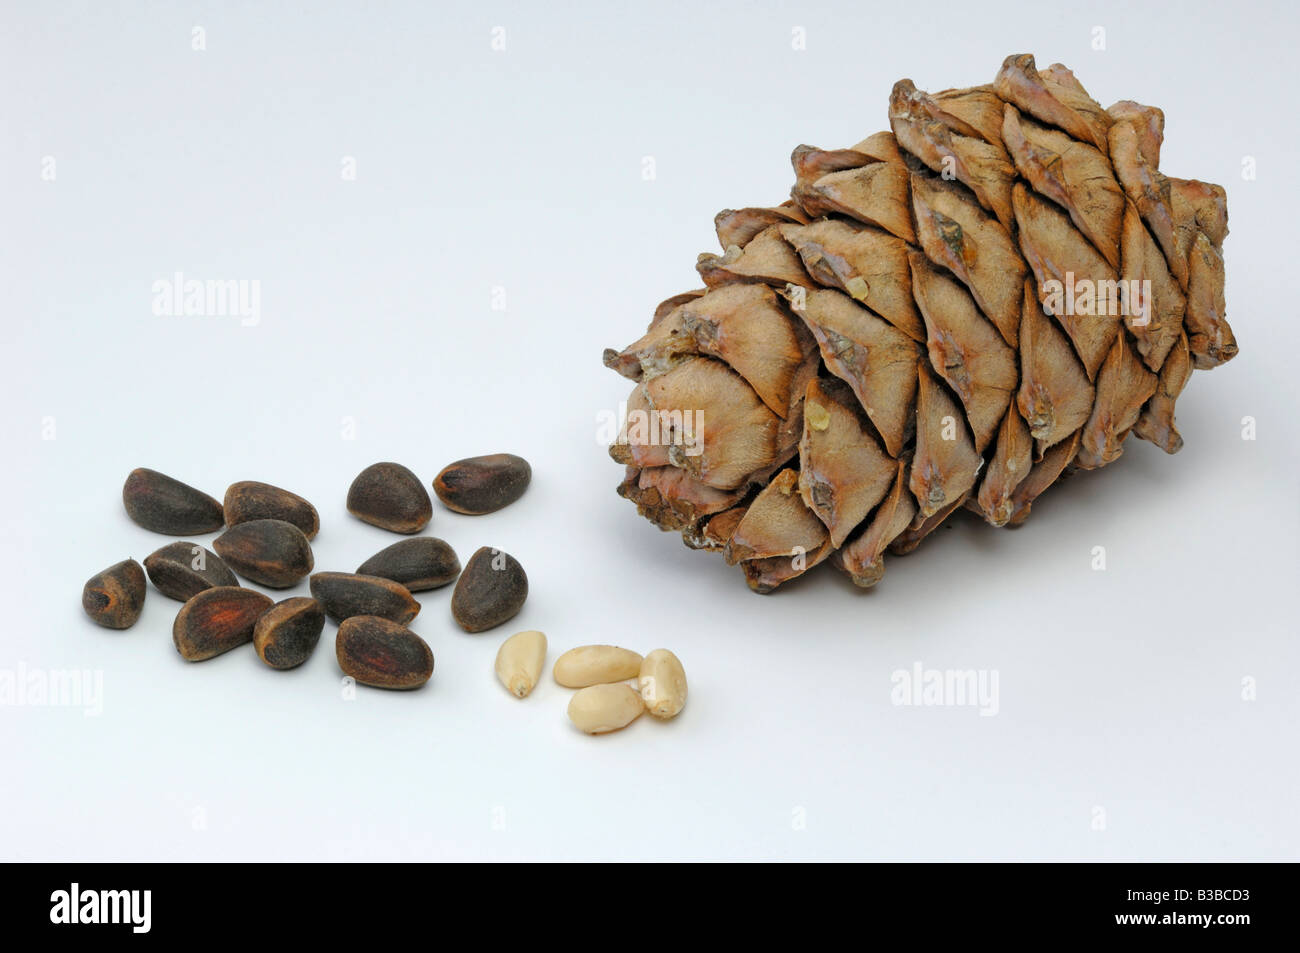 Siberian Pine, Sibirian Cedar (Cedrus sibirica, Pinus sibirica). Cone, peeled and unpeeled seeds, pine nuts, studio picture Stock Photo